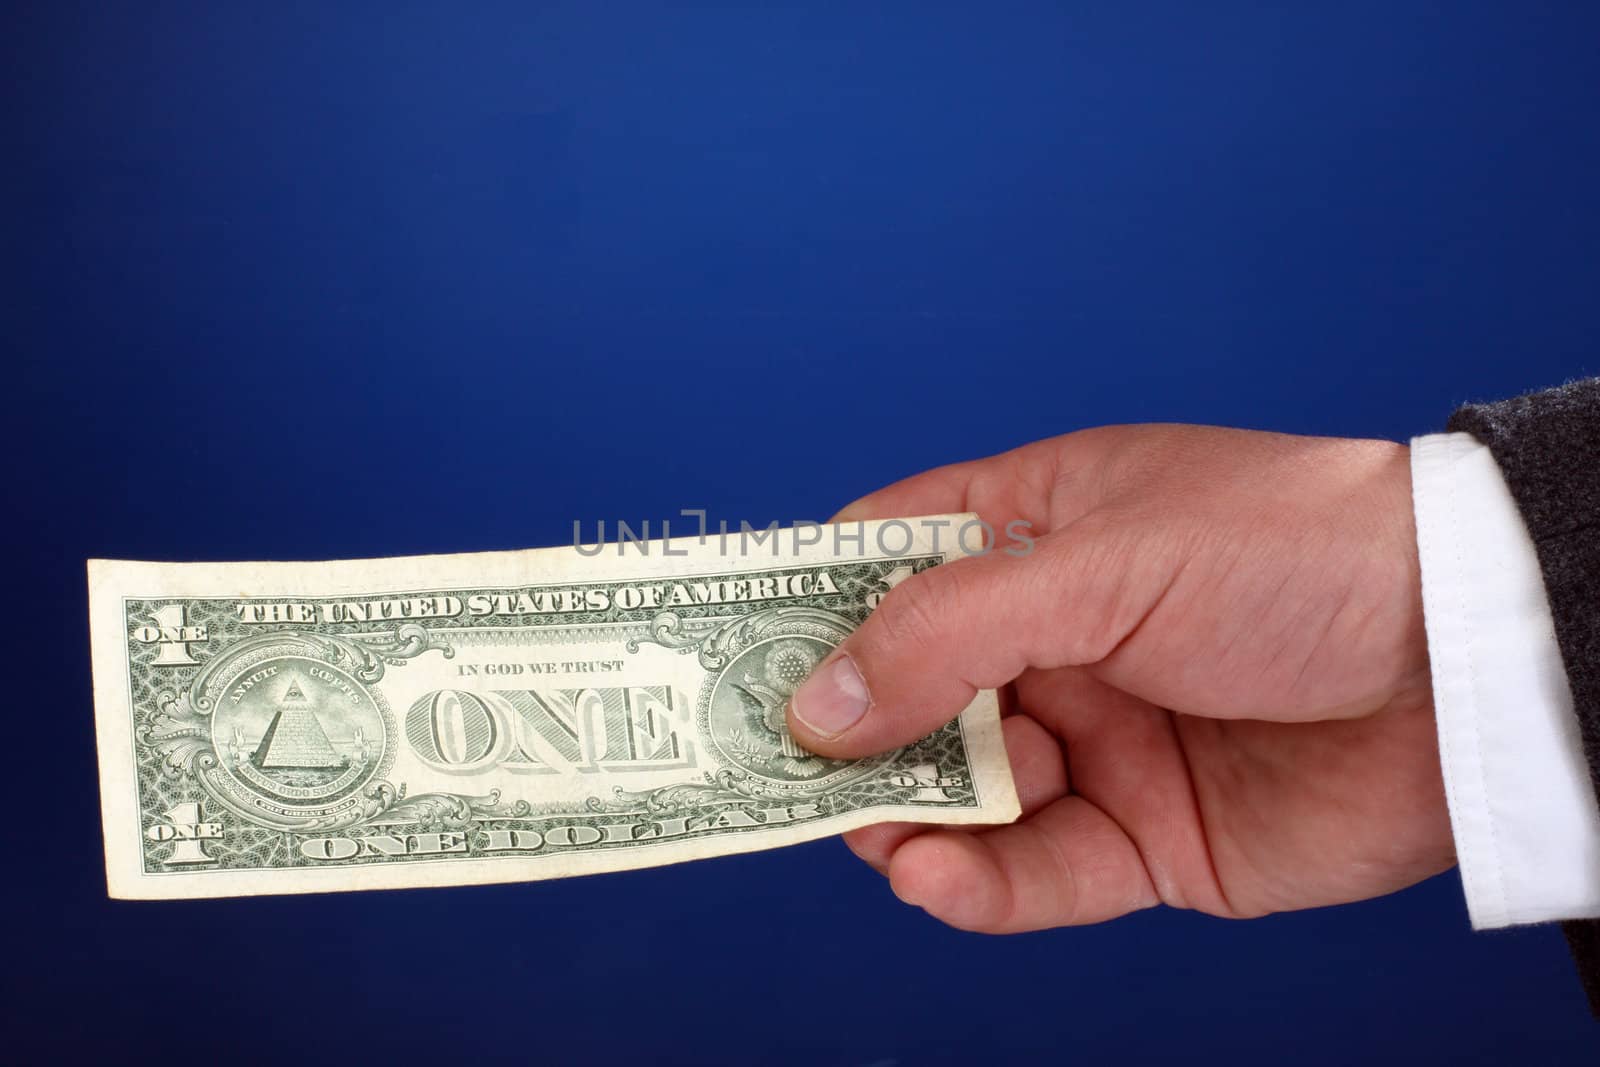  one dollar bill by alexkosev